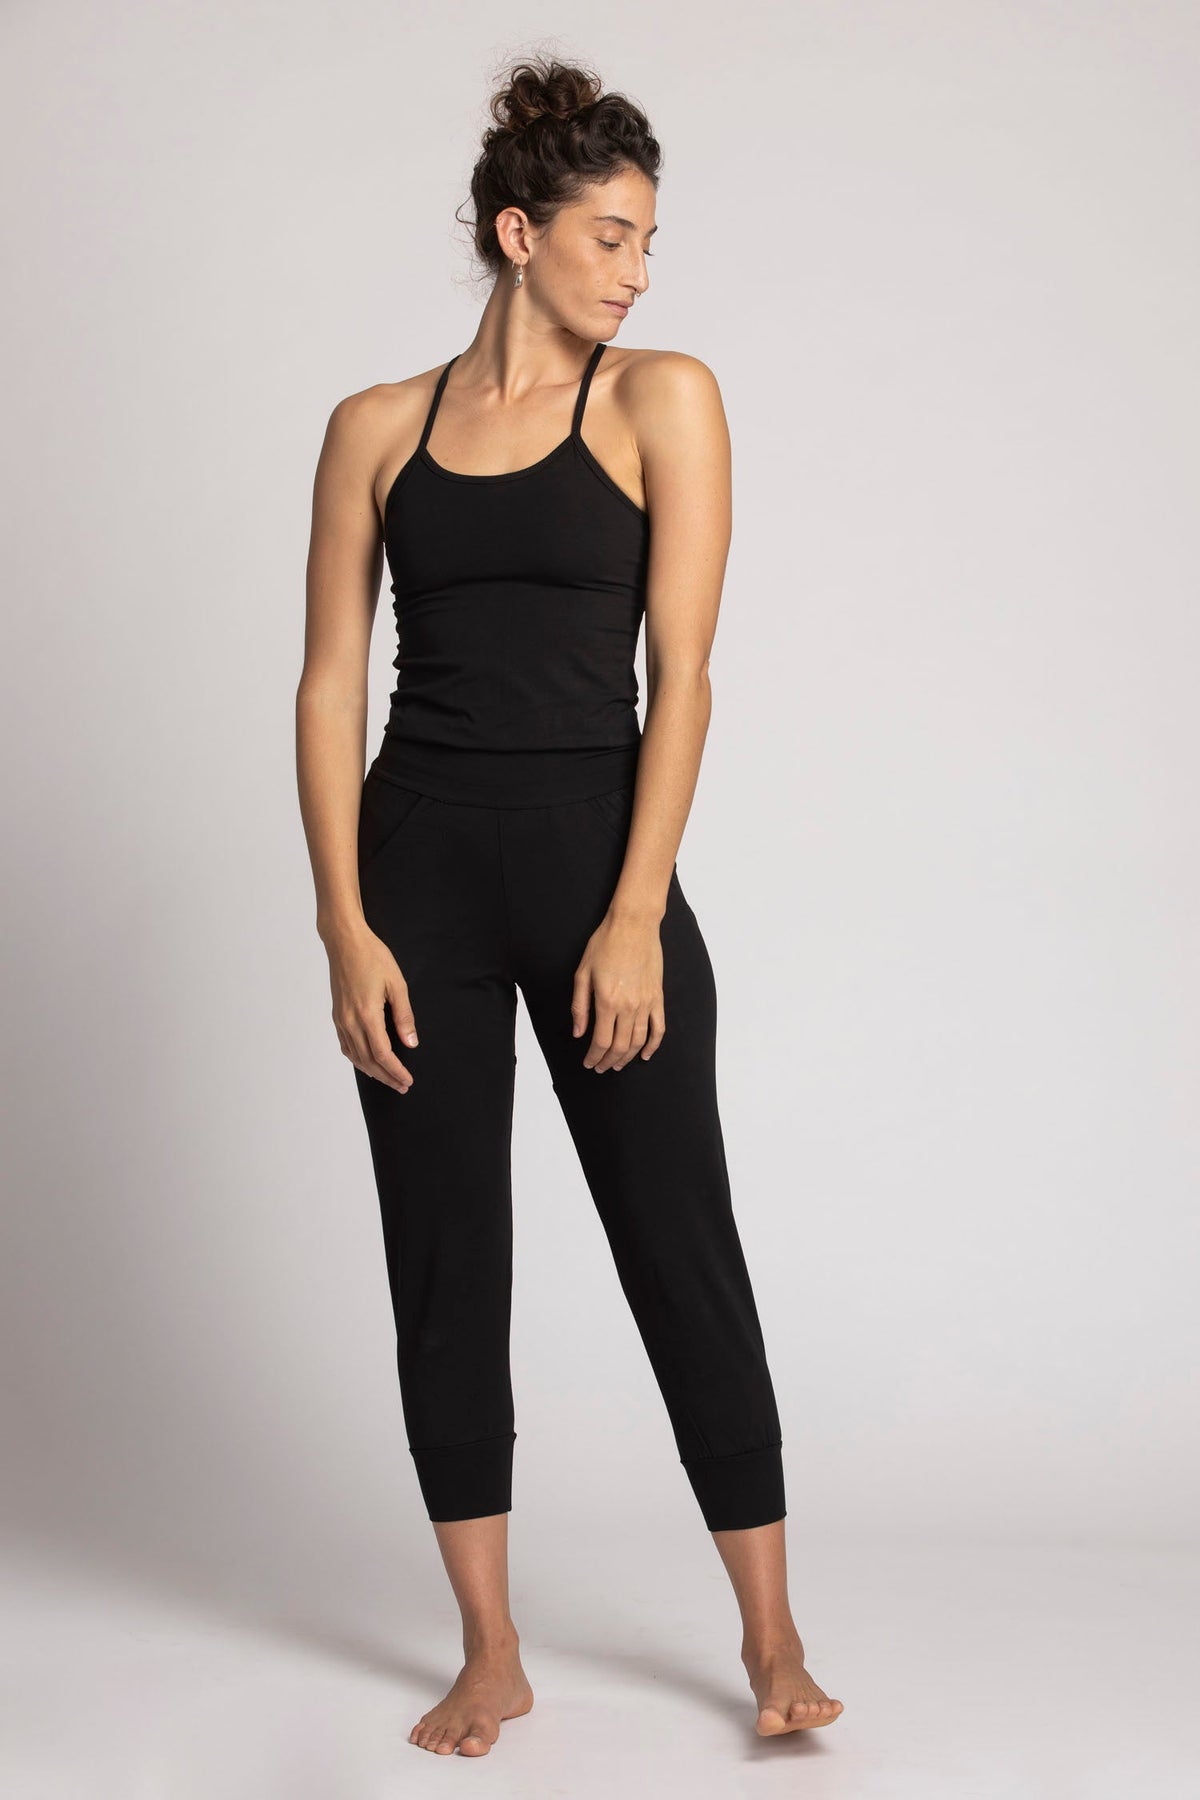 Organic Cotton Yoga Jumpsuit womens clothing Ripple Yoga Wear 